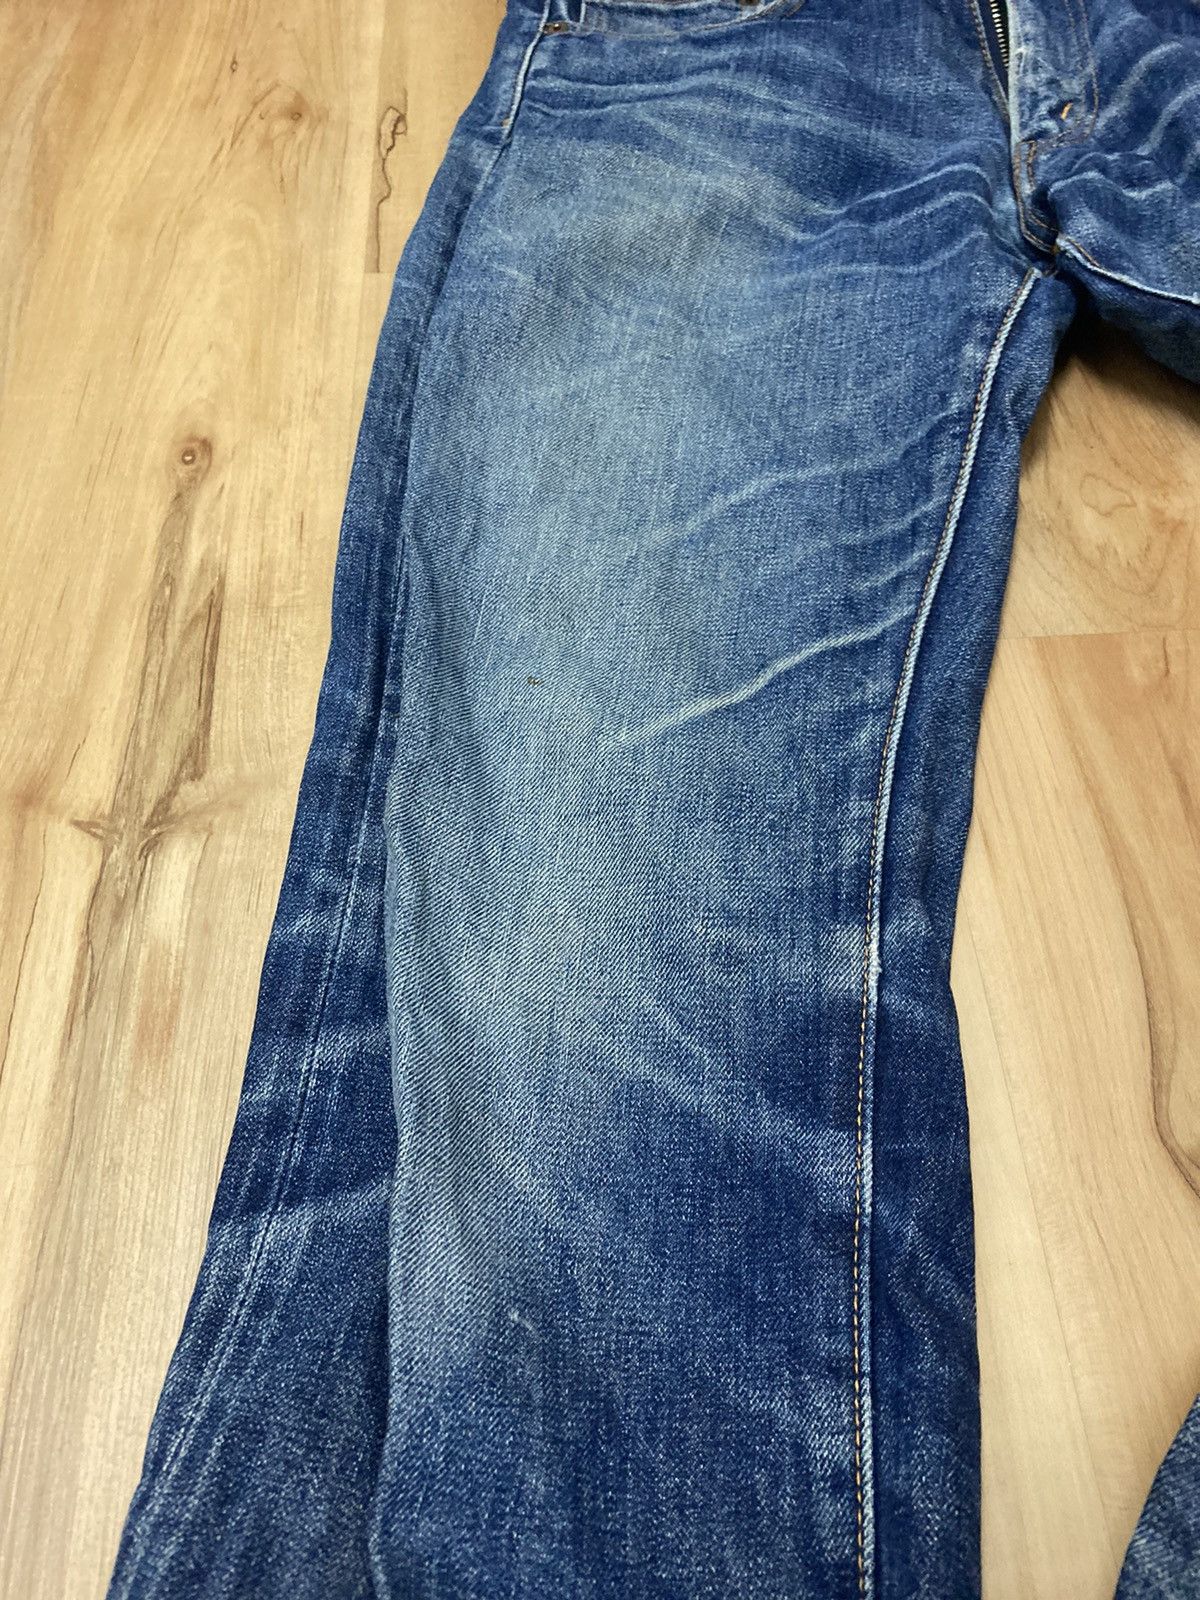 Denime Vintage denime jeans Size US 30 / EU 46 - 5 Thumbnail